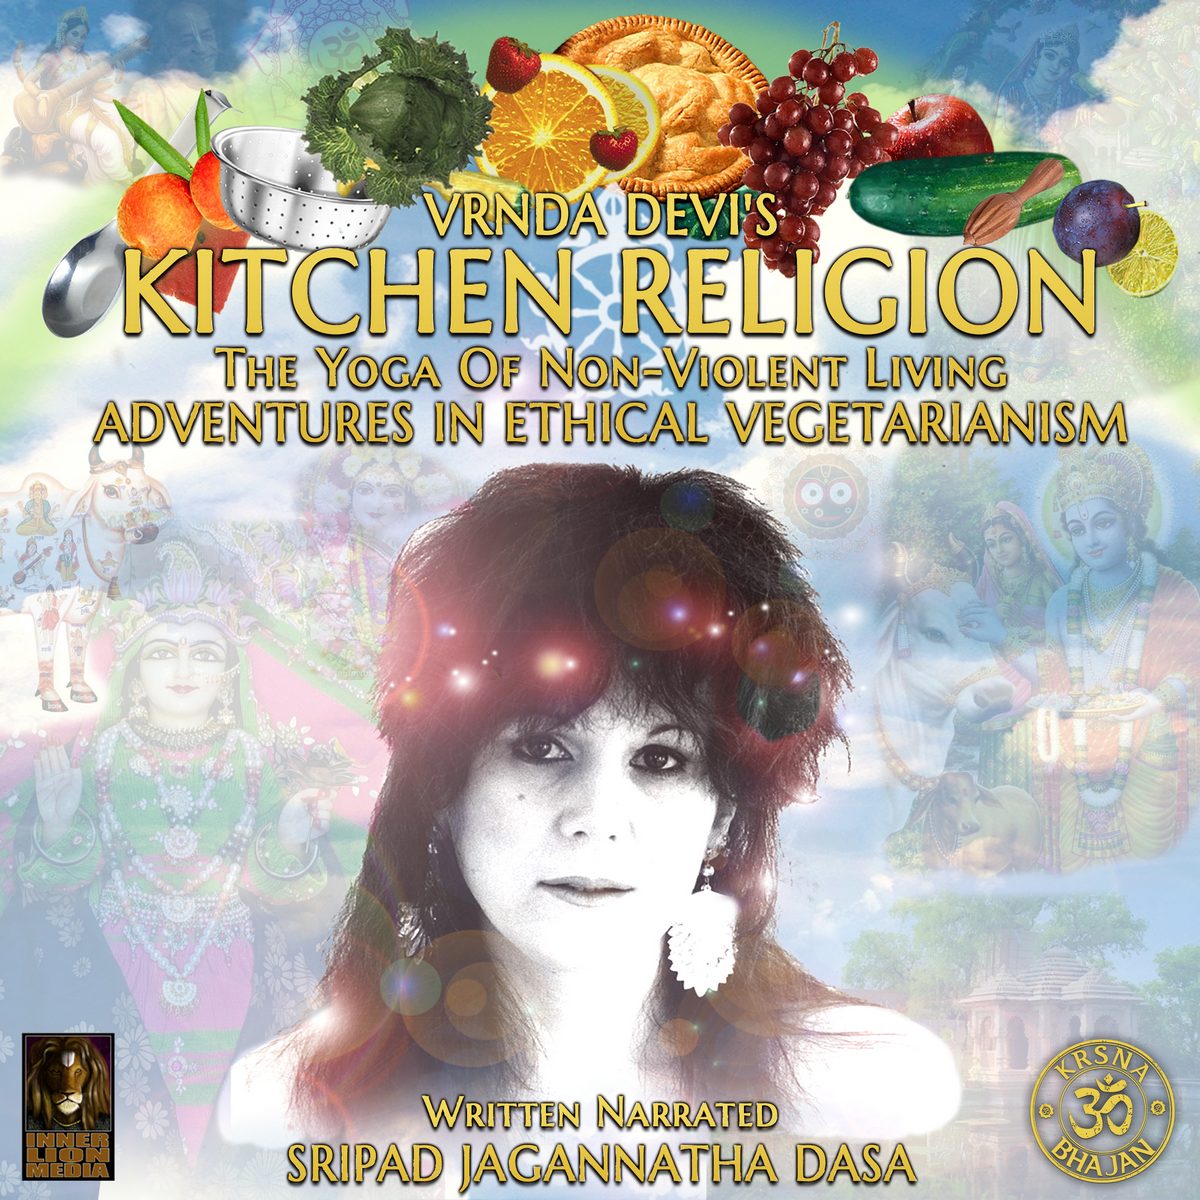 Vrnda Devi’s Kitchen Religion The Yoga Of Non-Violent Living – Adventures In Ethical Vegetarianism